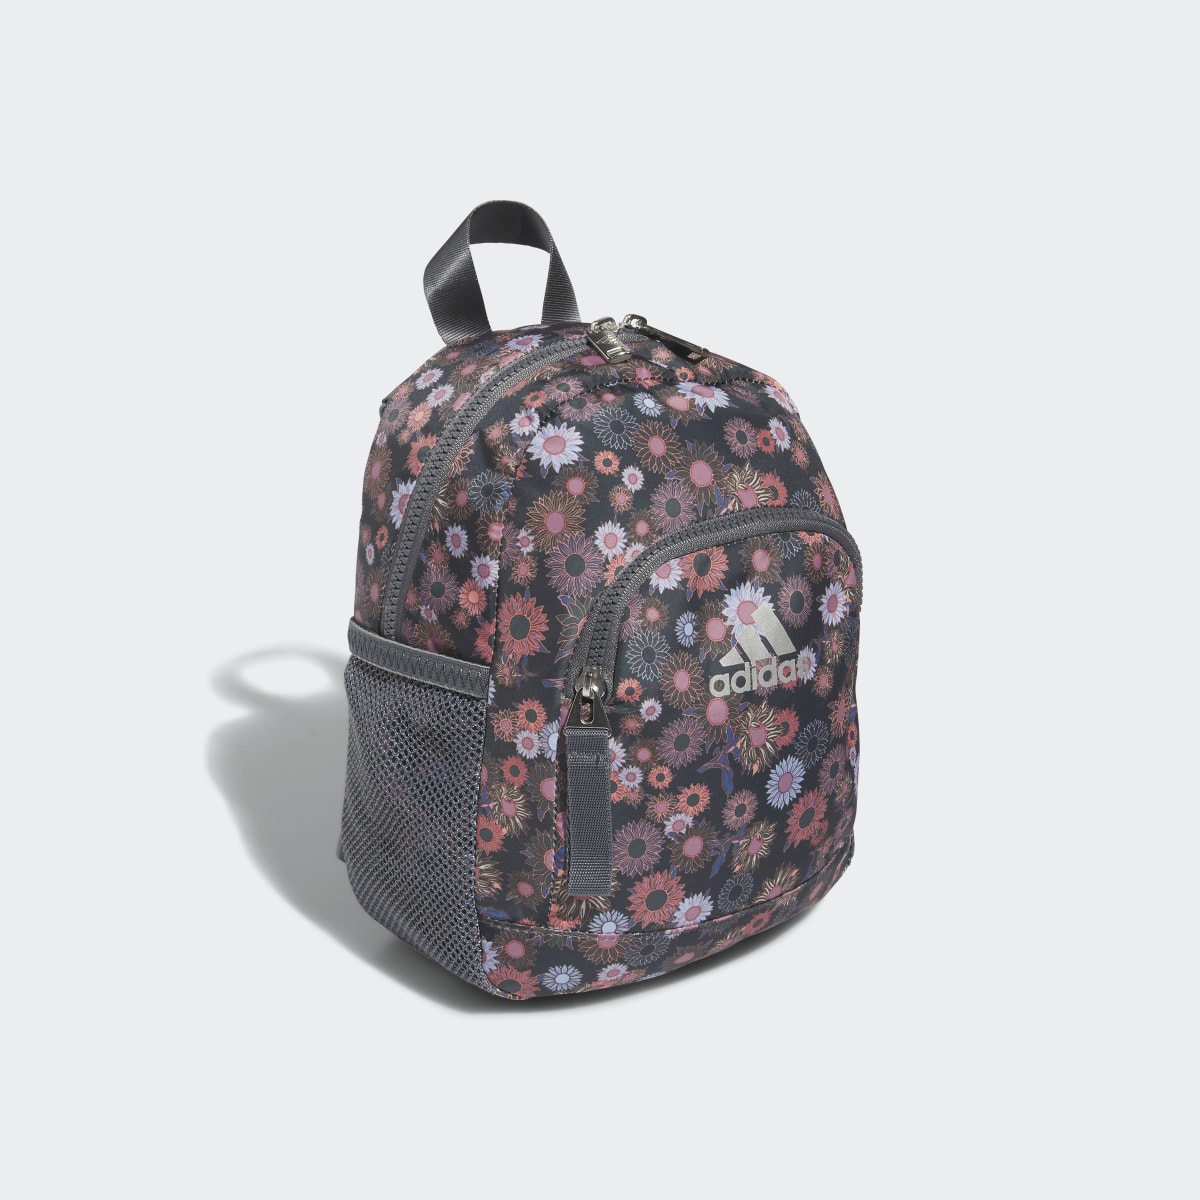 Adidas Linear 3 Mini Backpack. 4